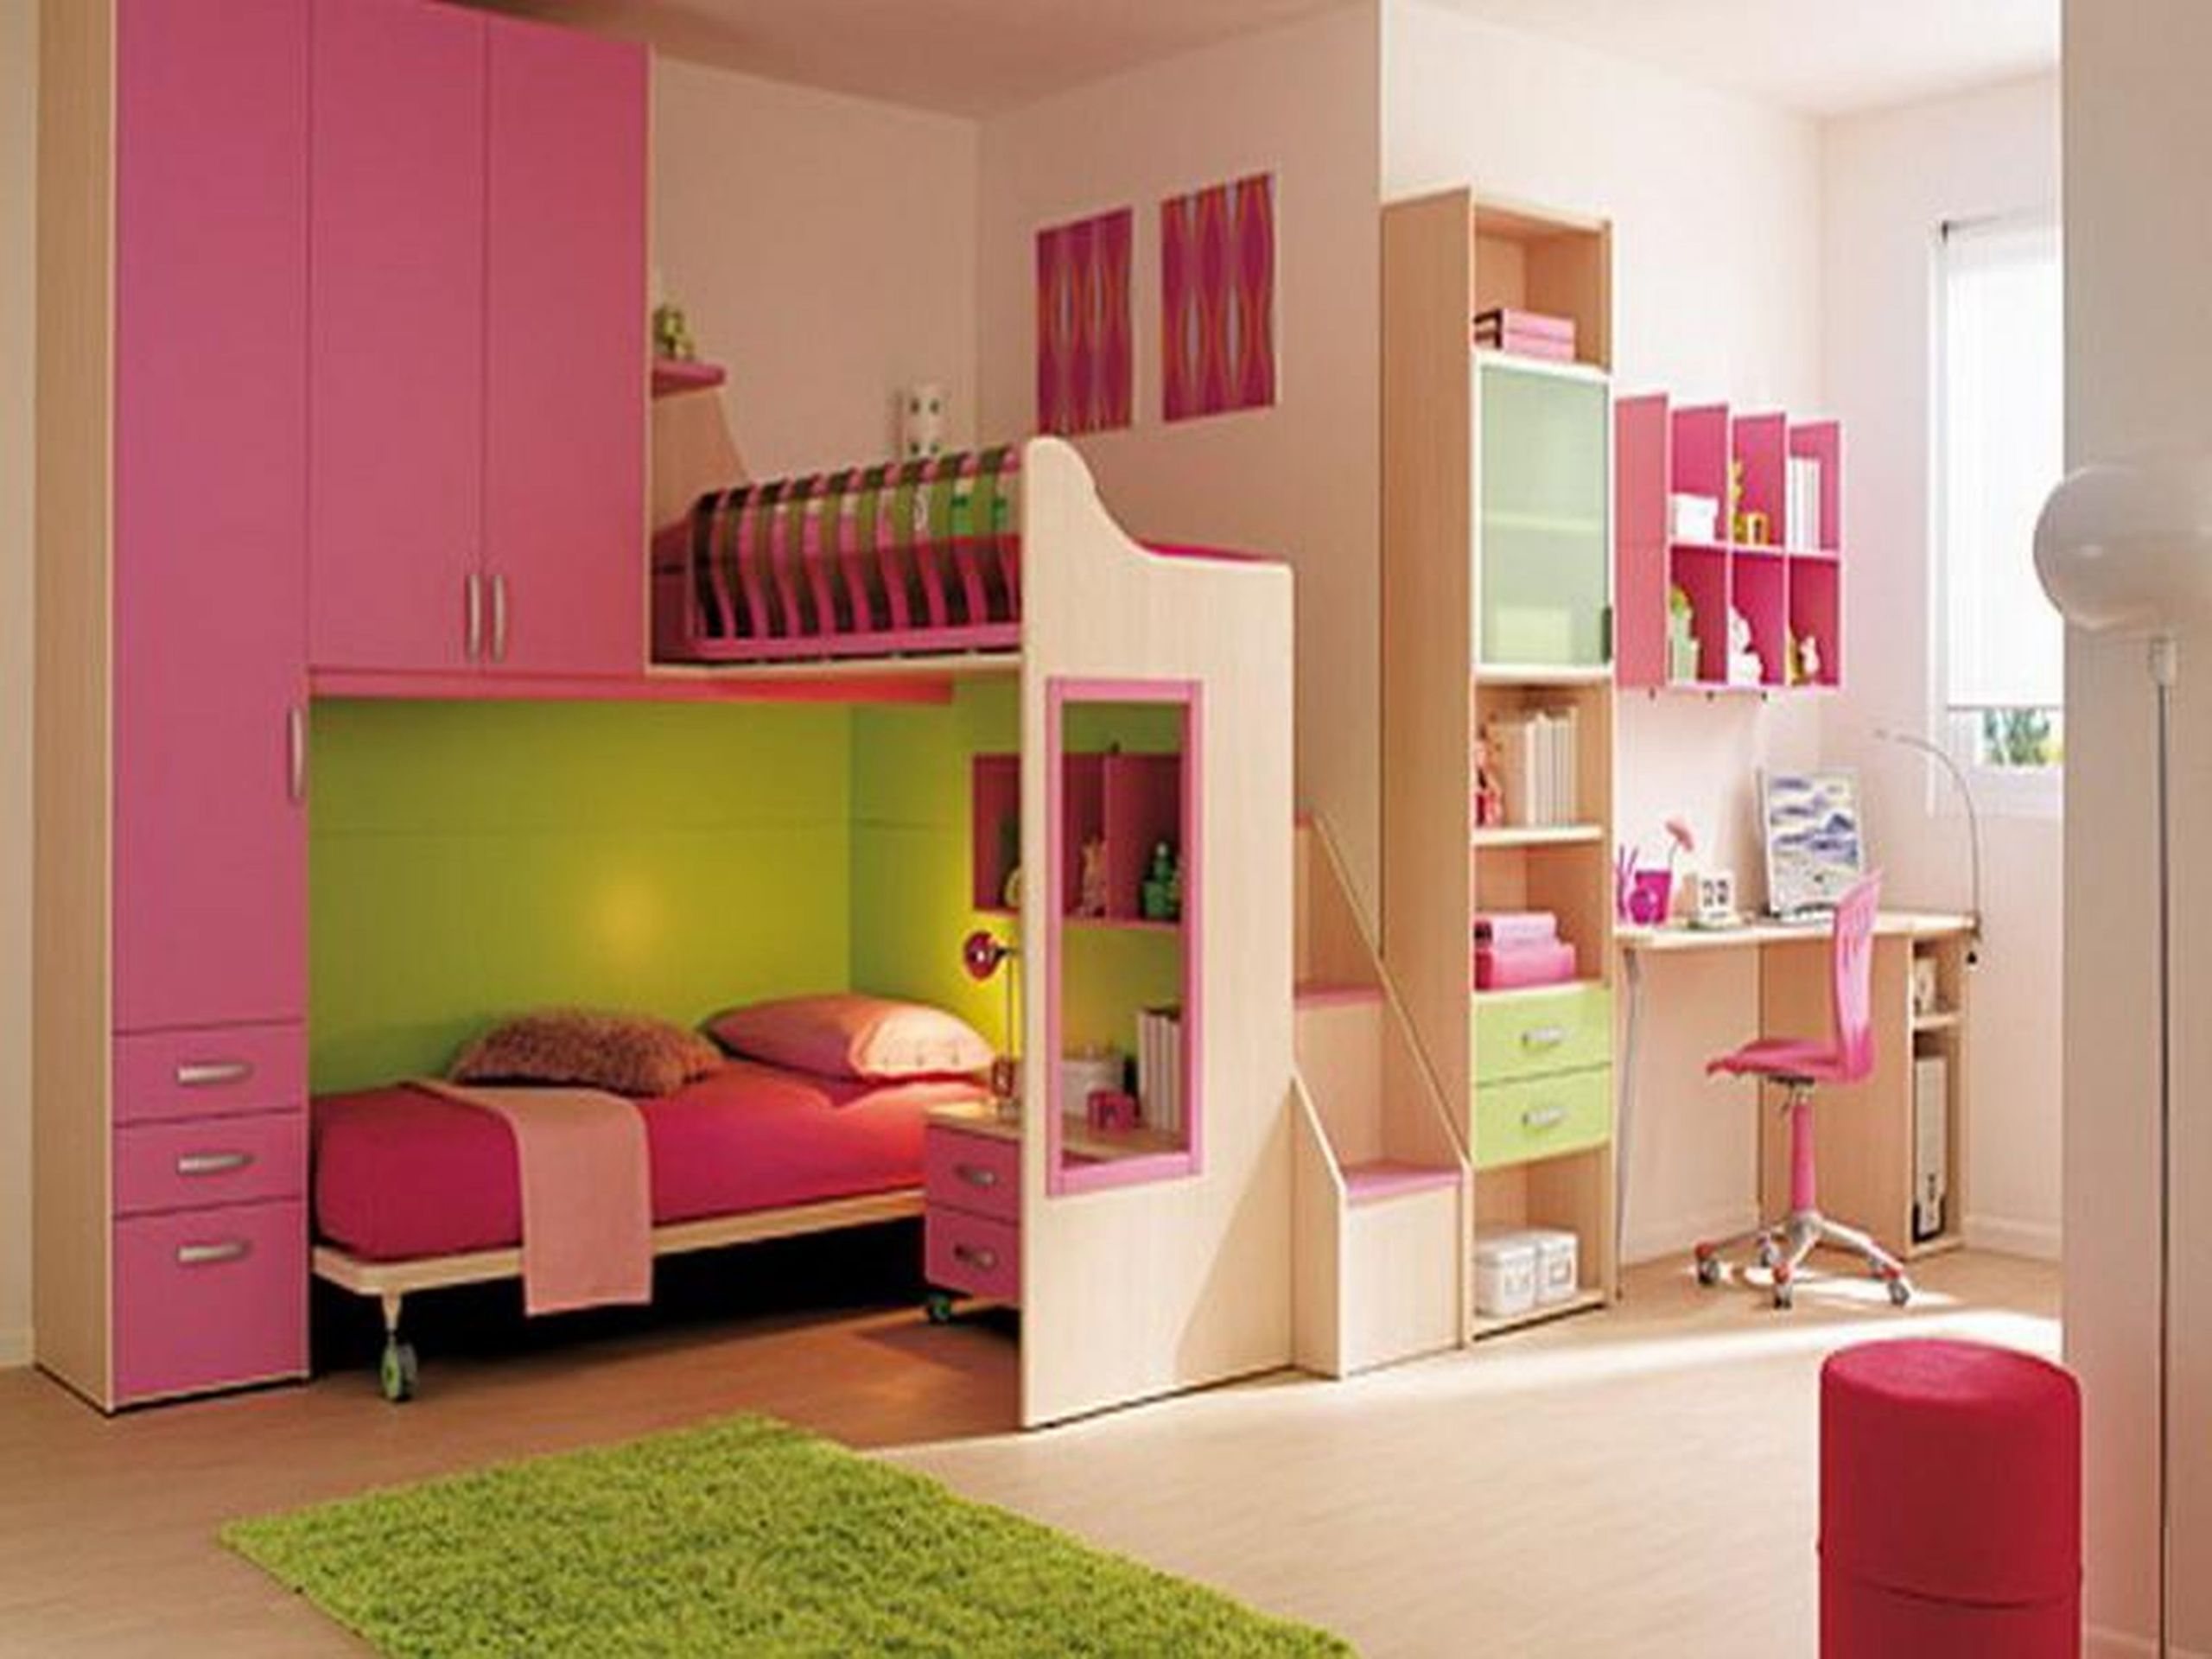 DIY Kids Bedroom
 DIY Storage Ideas For Kids Room Crafts To Do With Kids